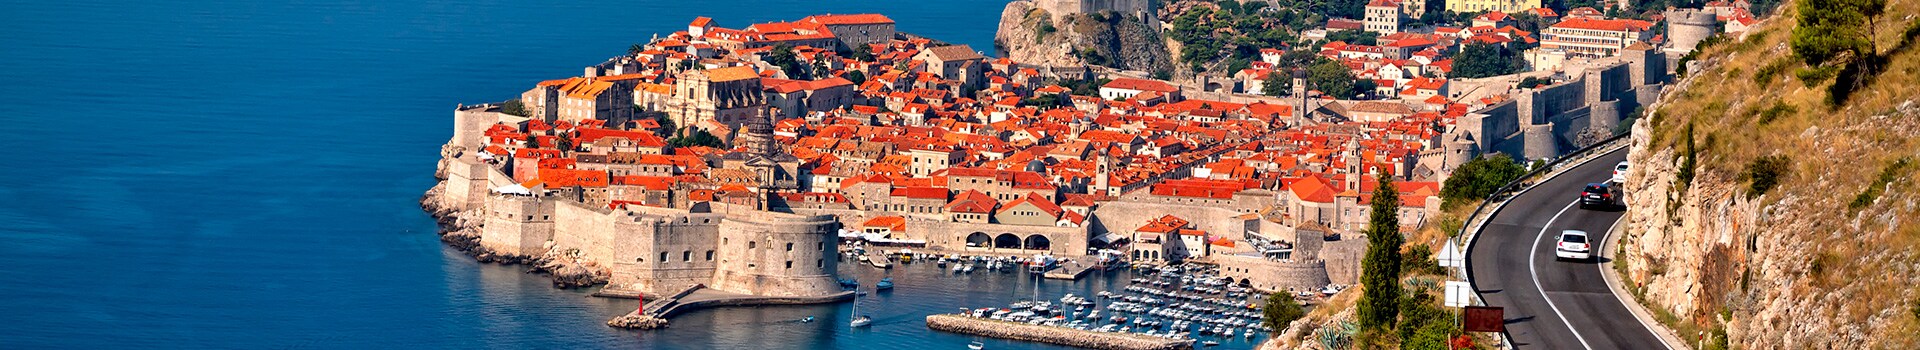 Lissabon - Dubrovnik